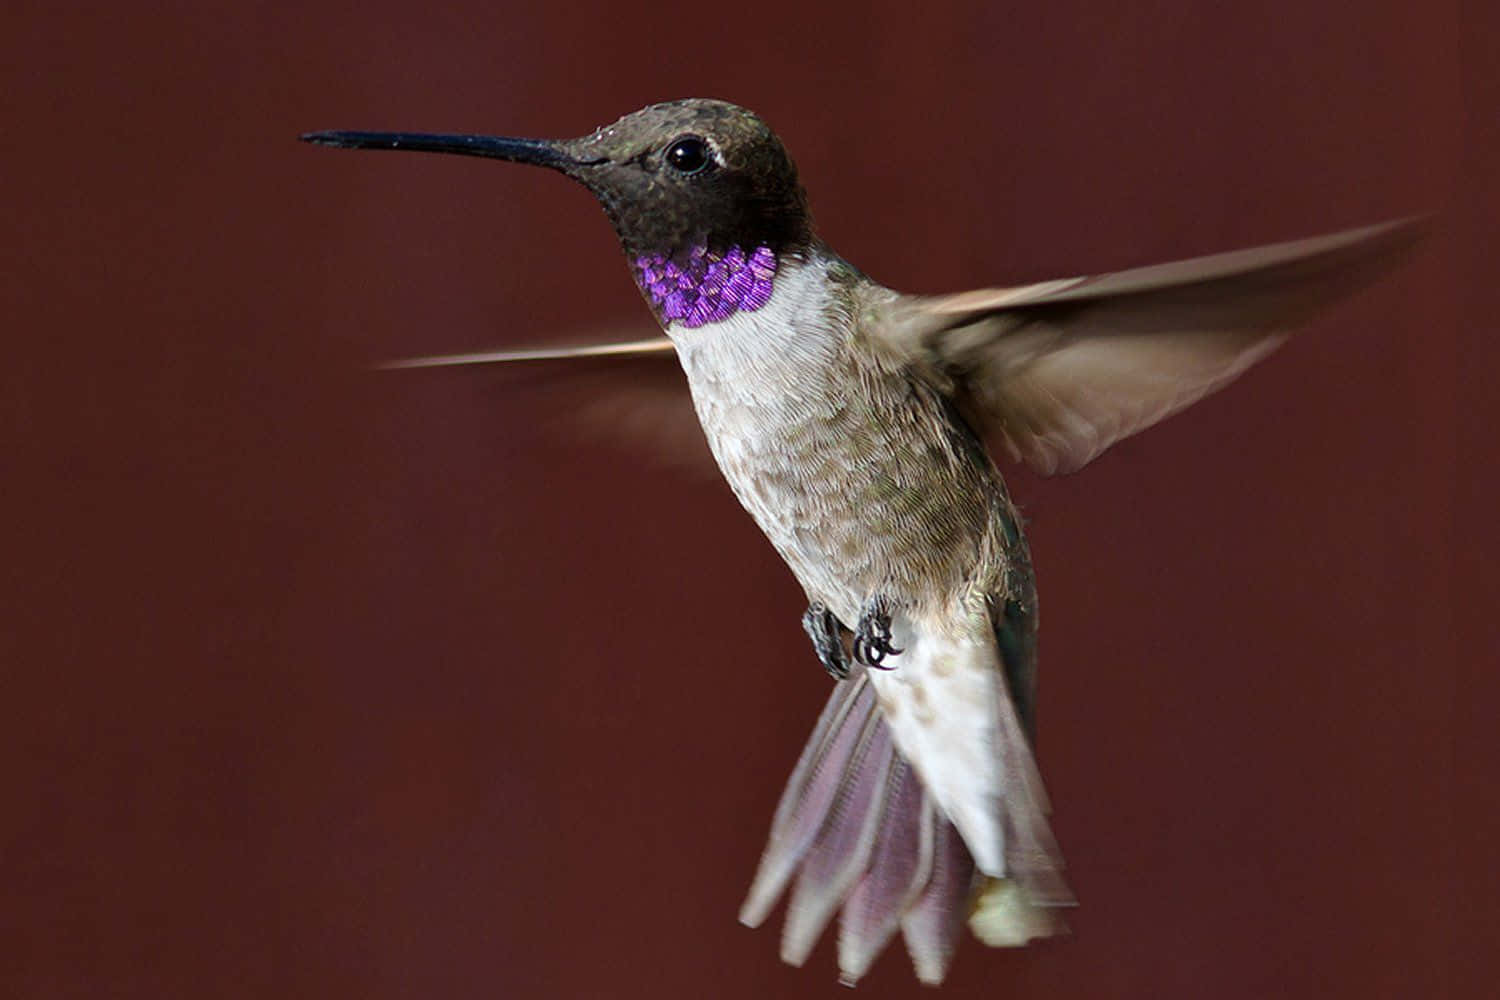 A Female Hummingbird in Flight